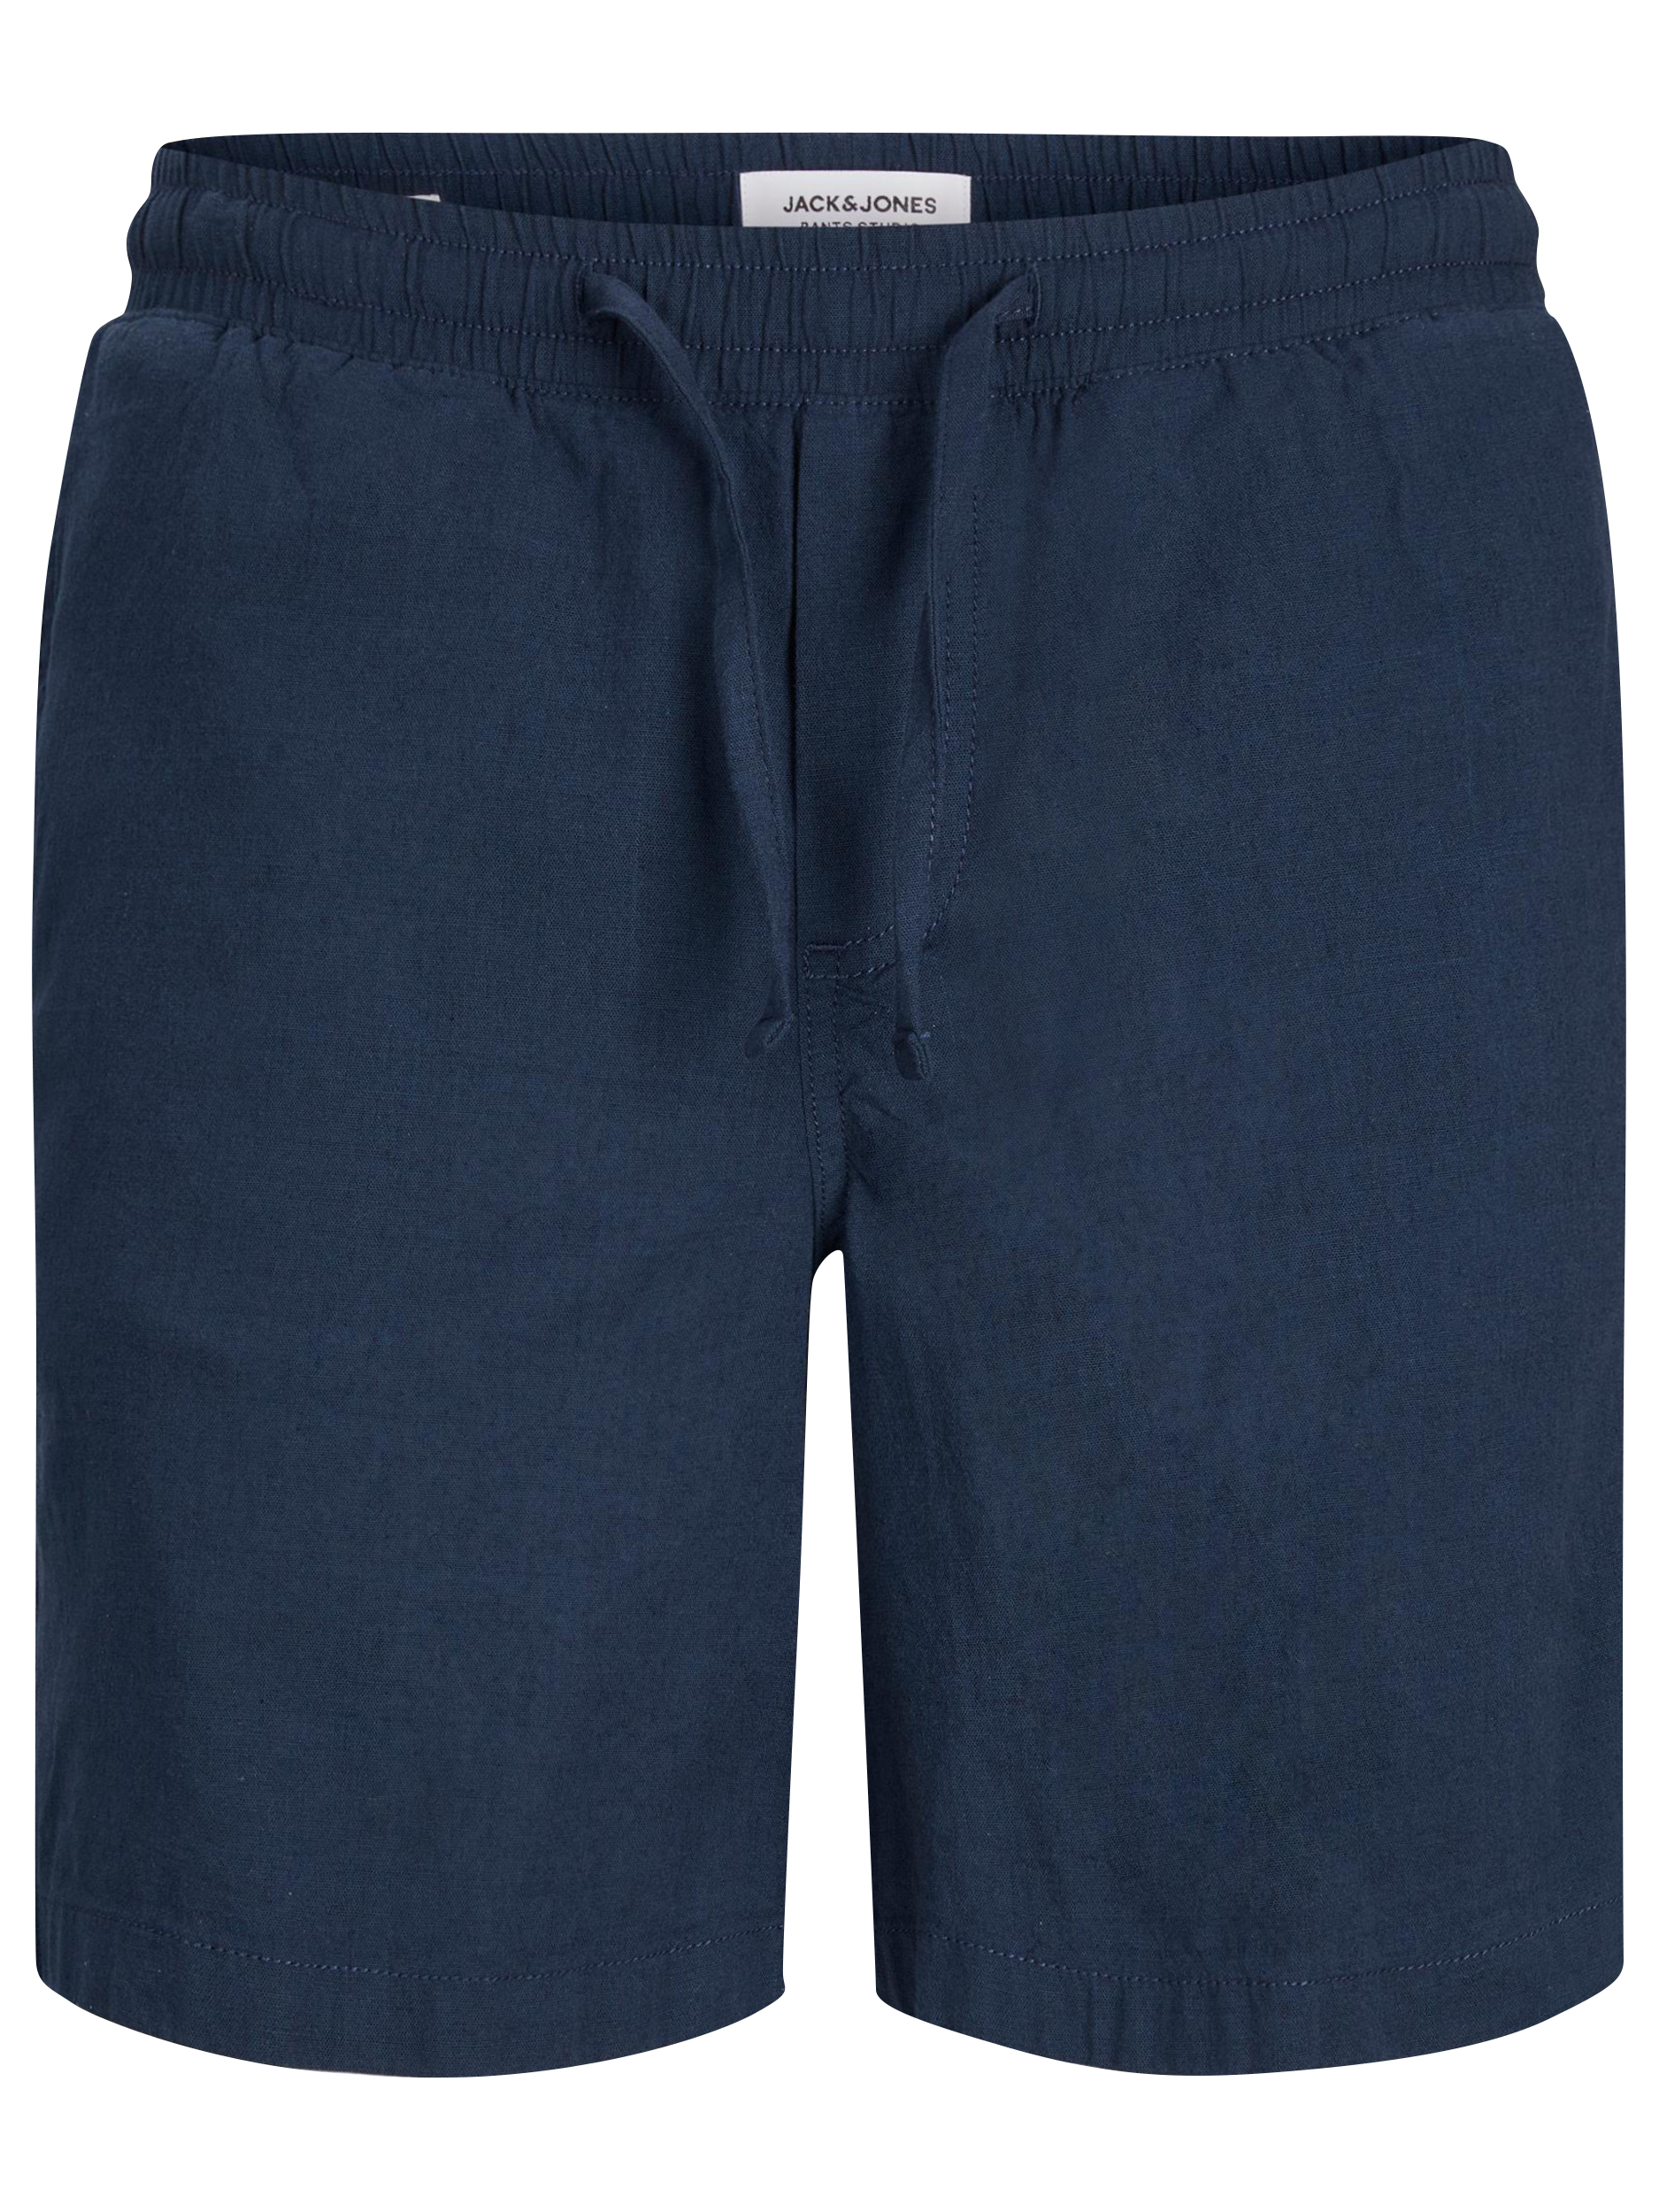 JACK & JONES Big & Tall Navy Blue Linen Blend Shorts | BadRhino 3